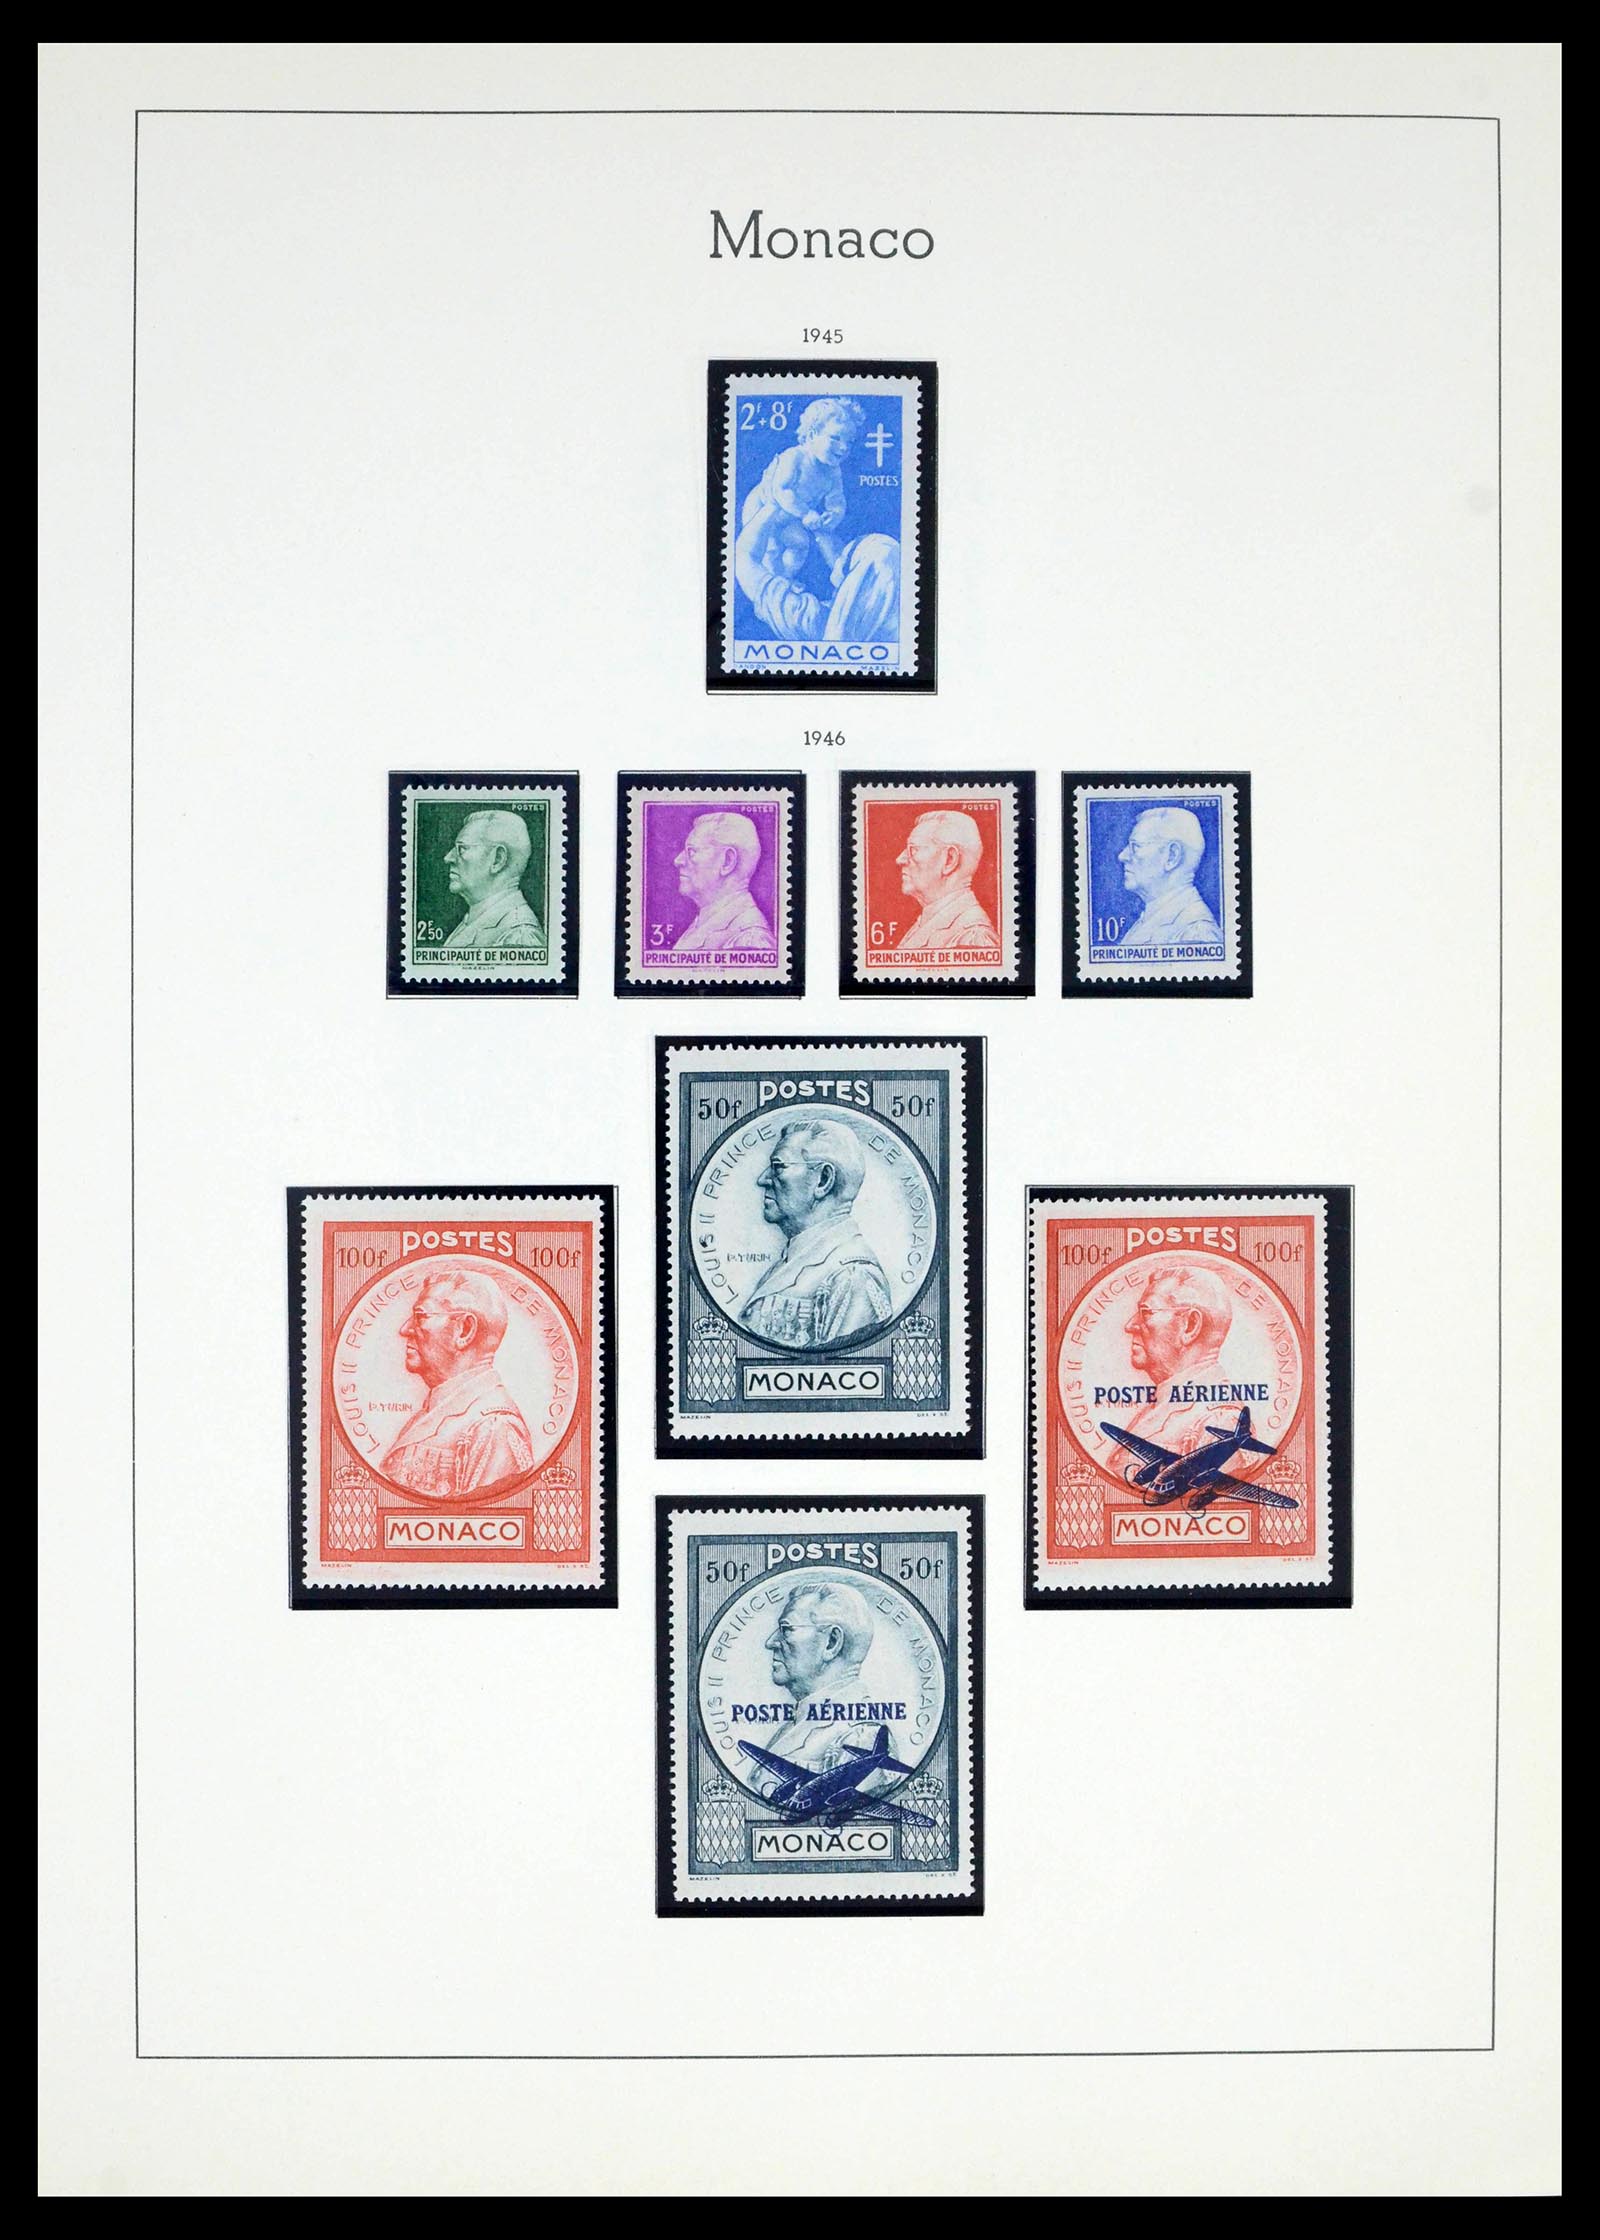 39392 0024 - Stamp collection 39392 Monaco 1885-1999.